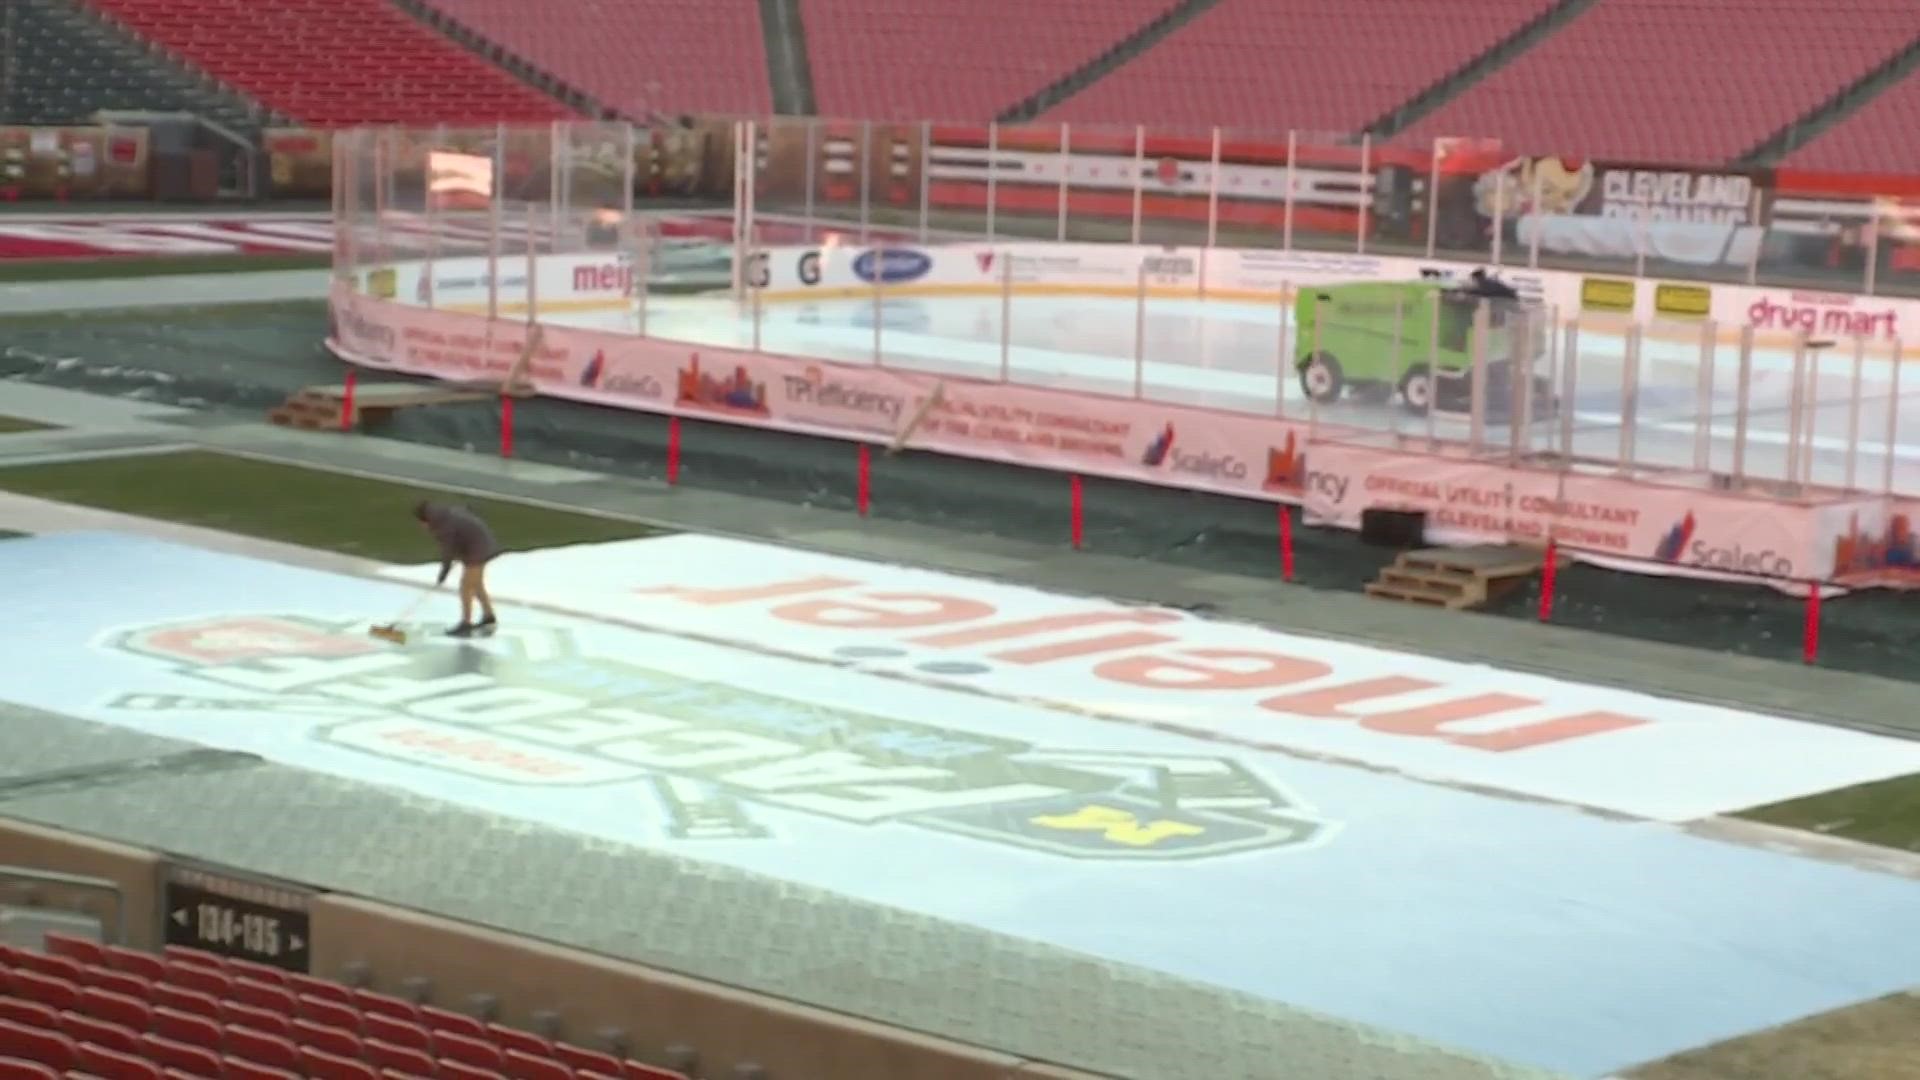 Ohio StateMichigan take feud on ice in Cleveland